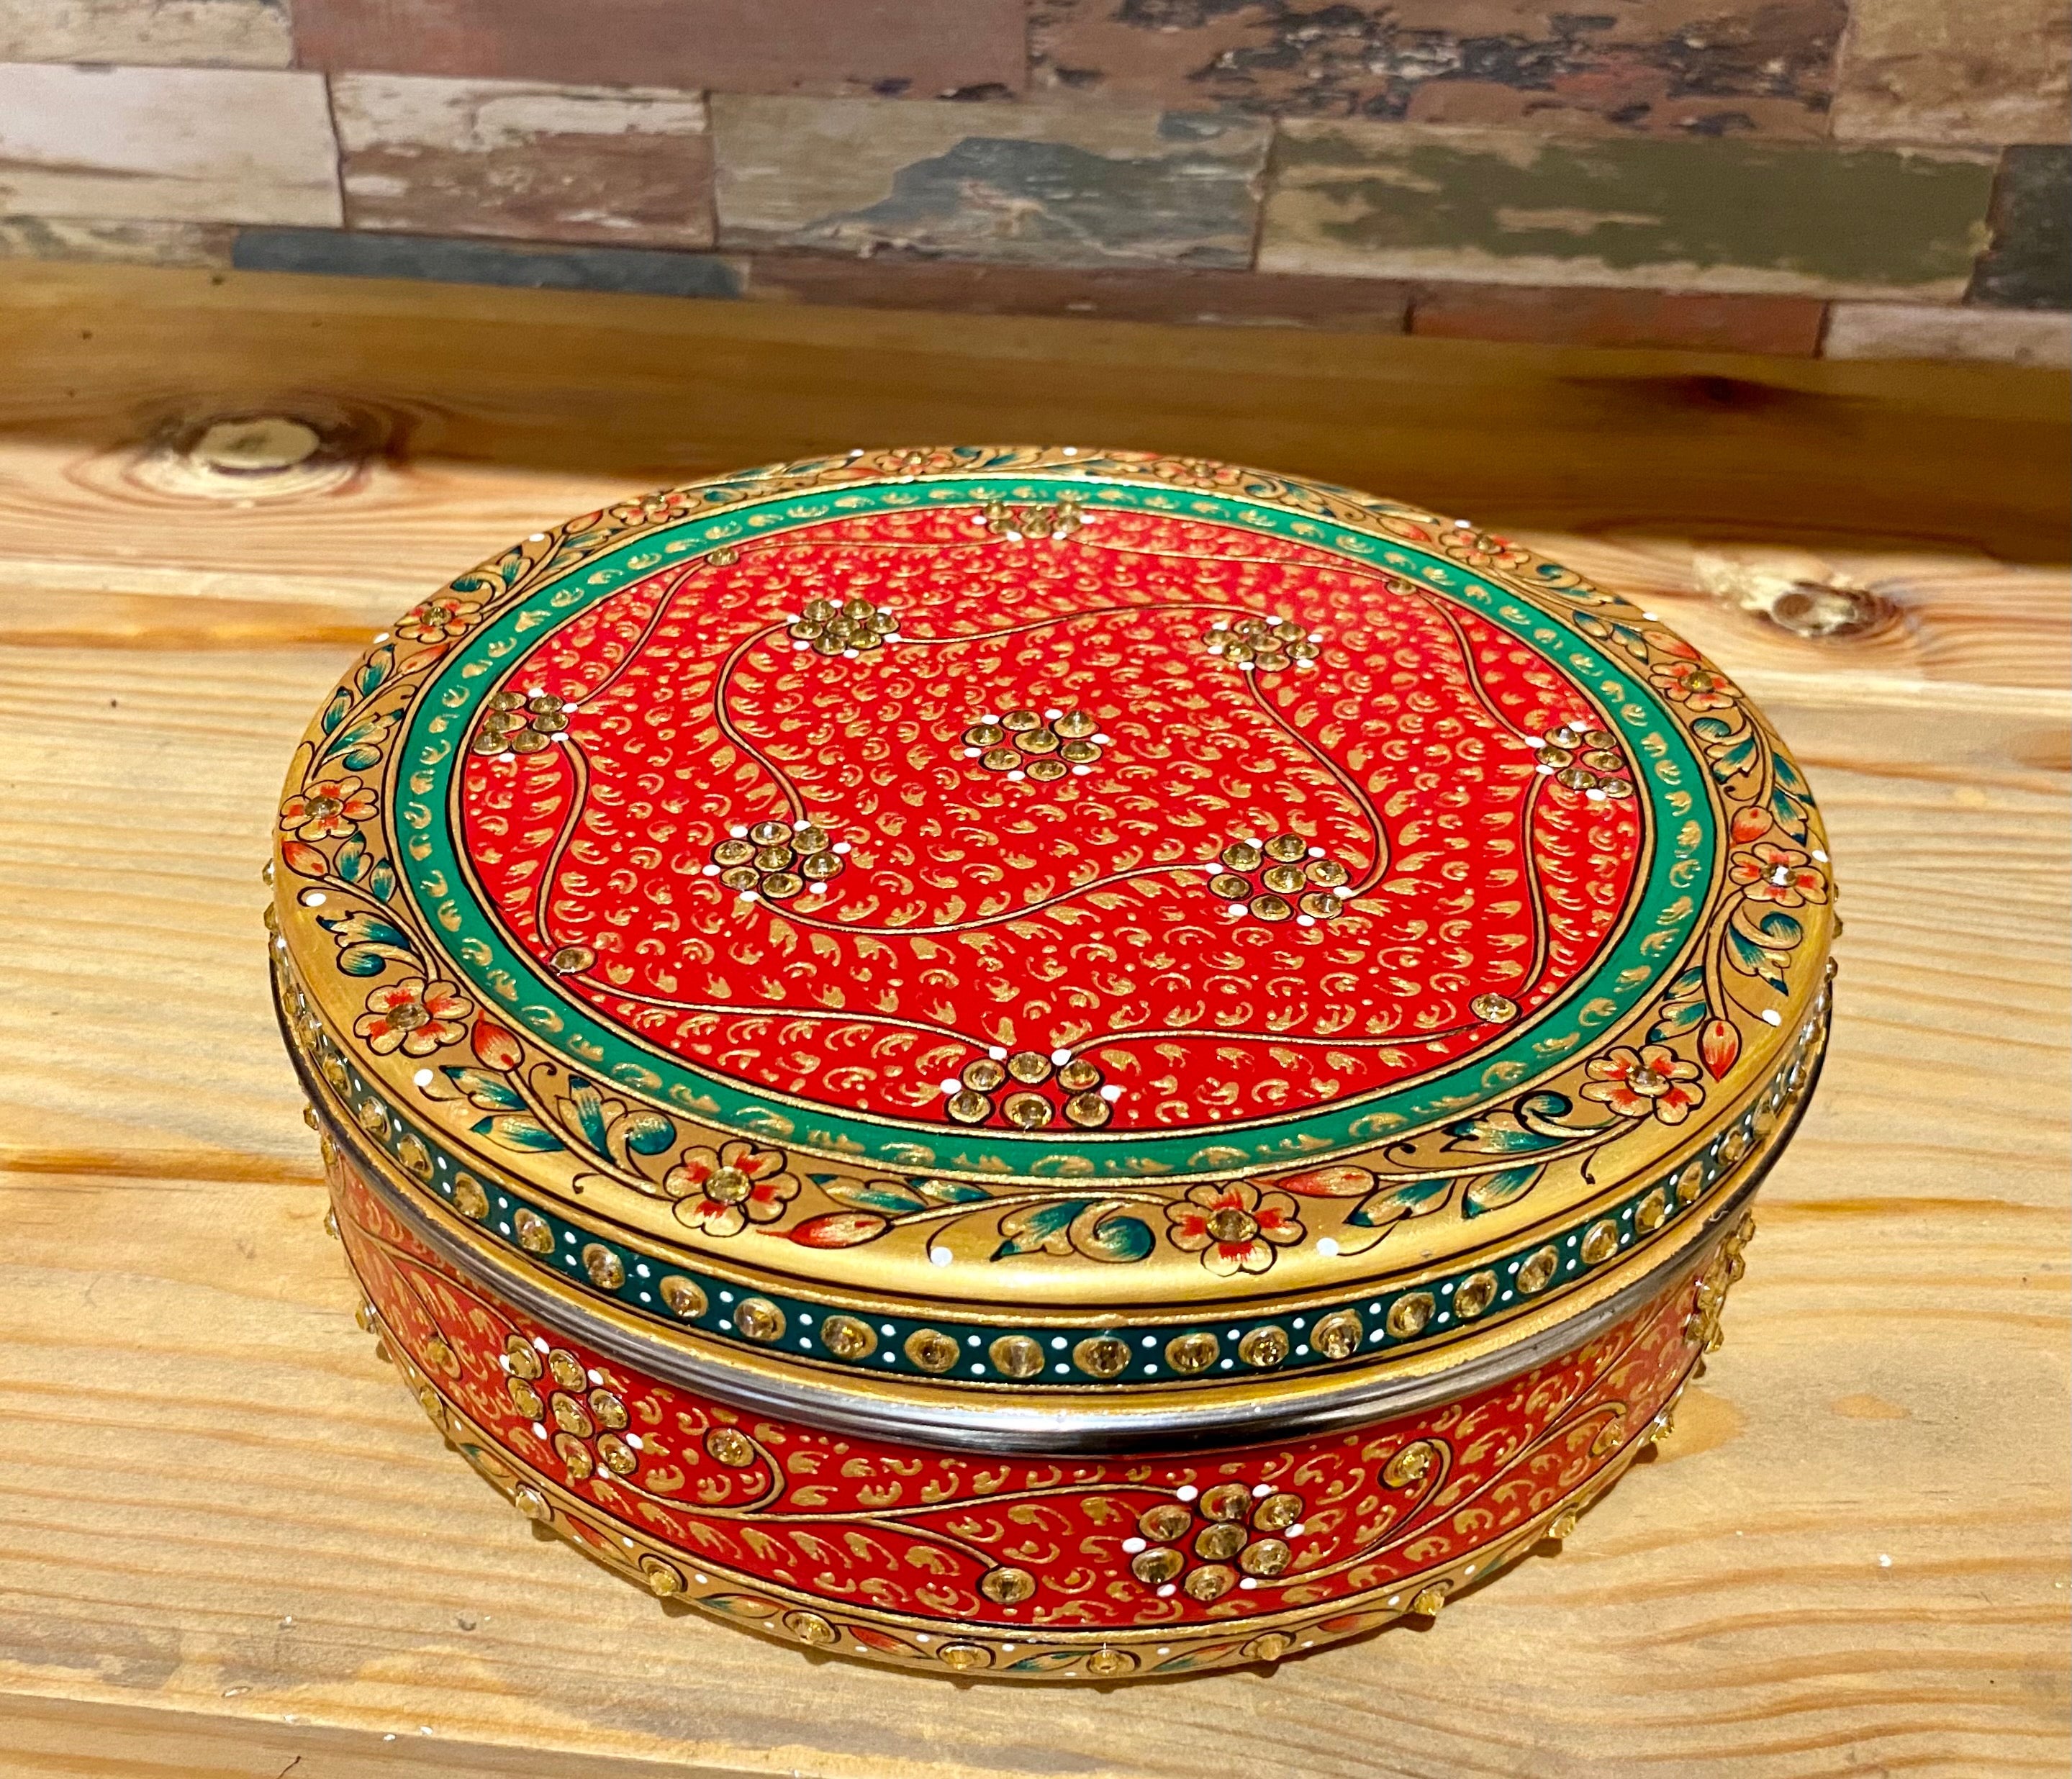 Kaushalam Hand Painted Spice Box - Masala Box, Spice Containers, Indian Masala daani